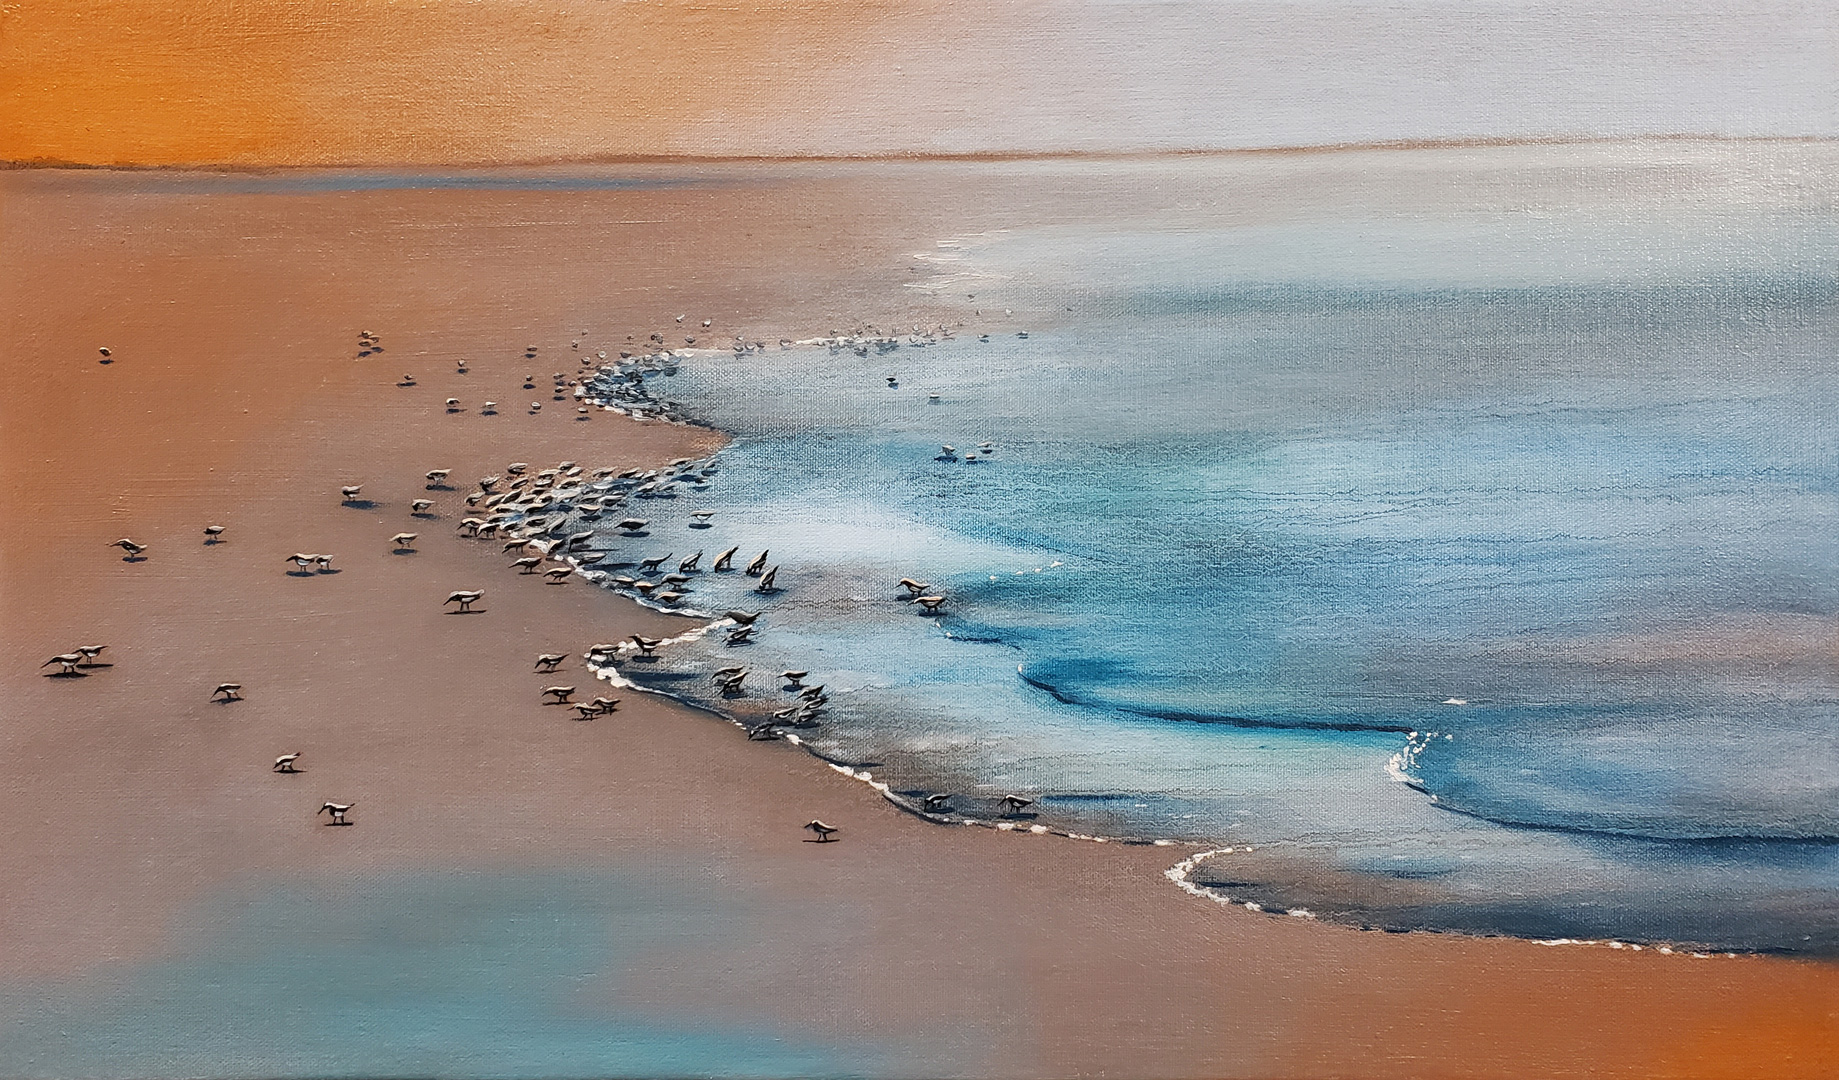 Western Sandpiper Flock, Oil on canvas, 24 x 14